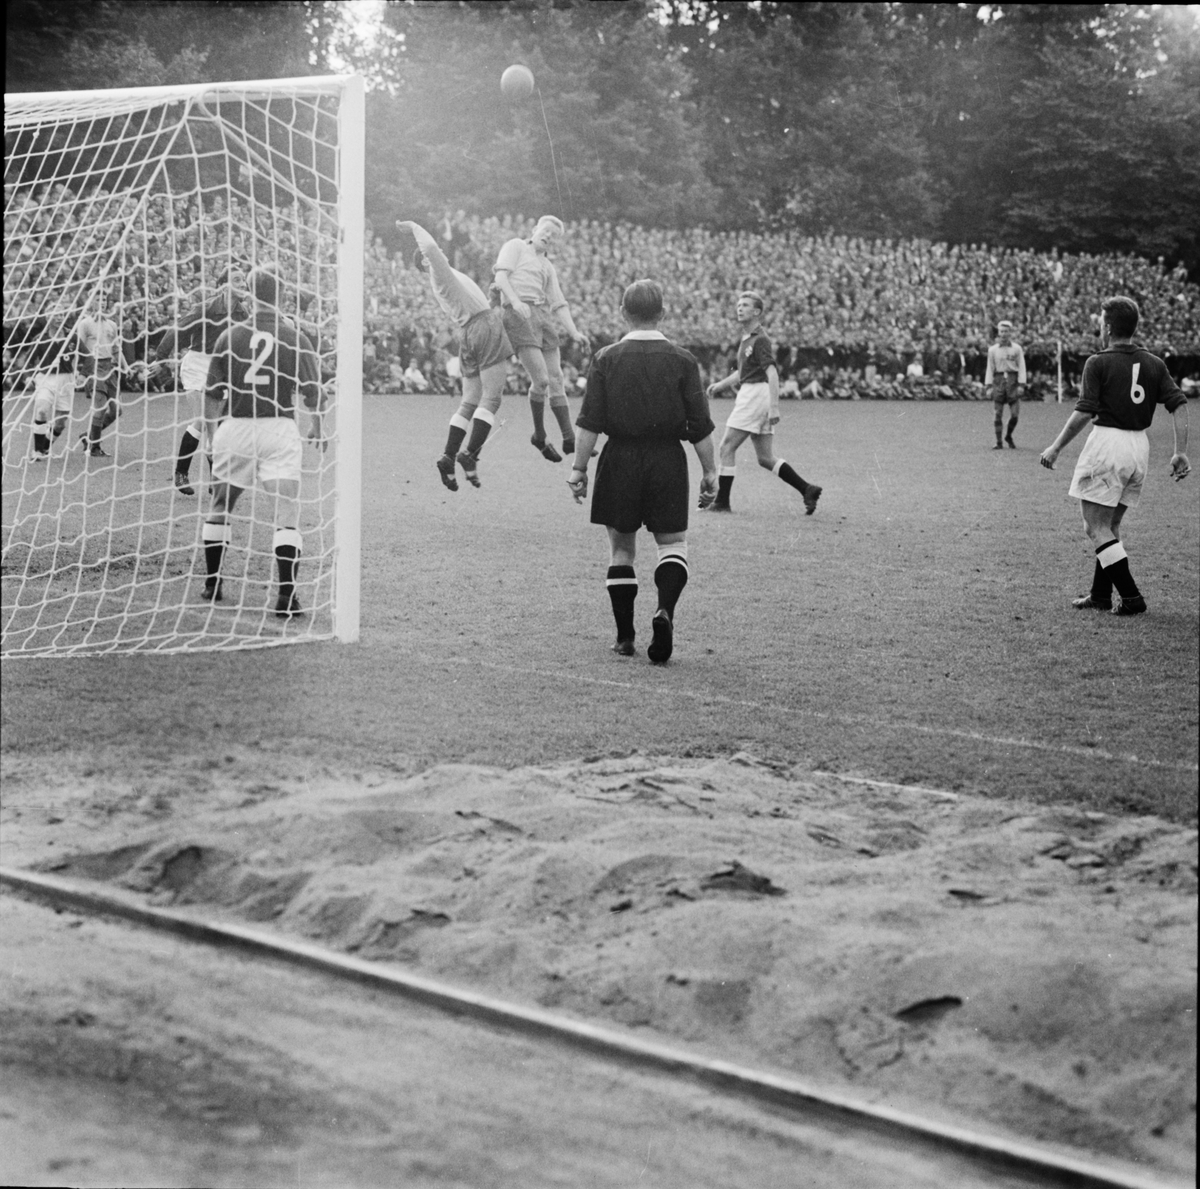 Sverige - Norge i B-landskamp i fotboll, Uppsala 1958